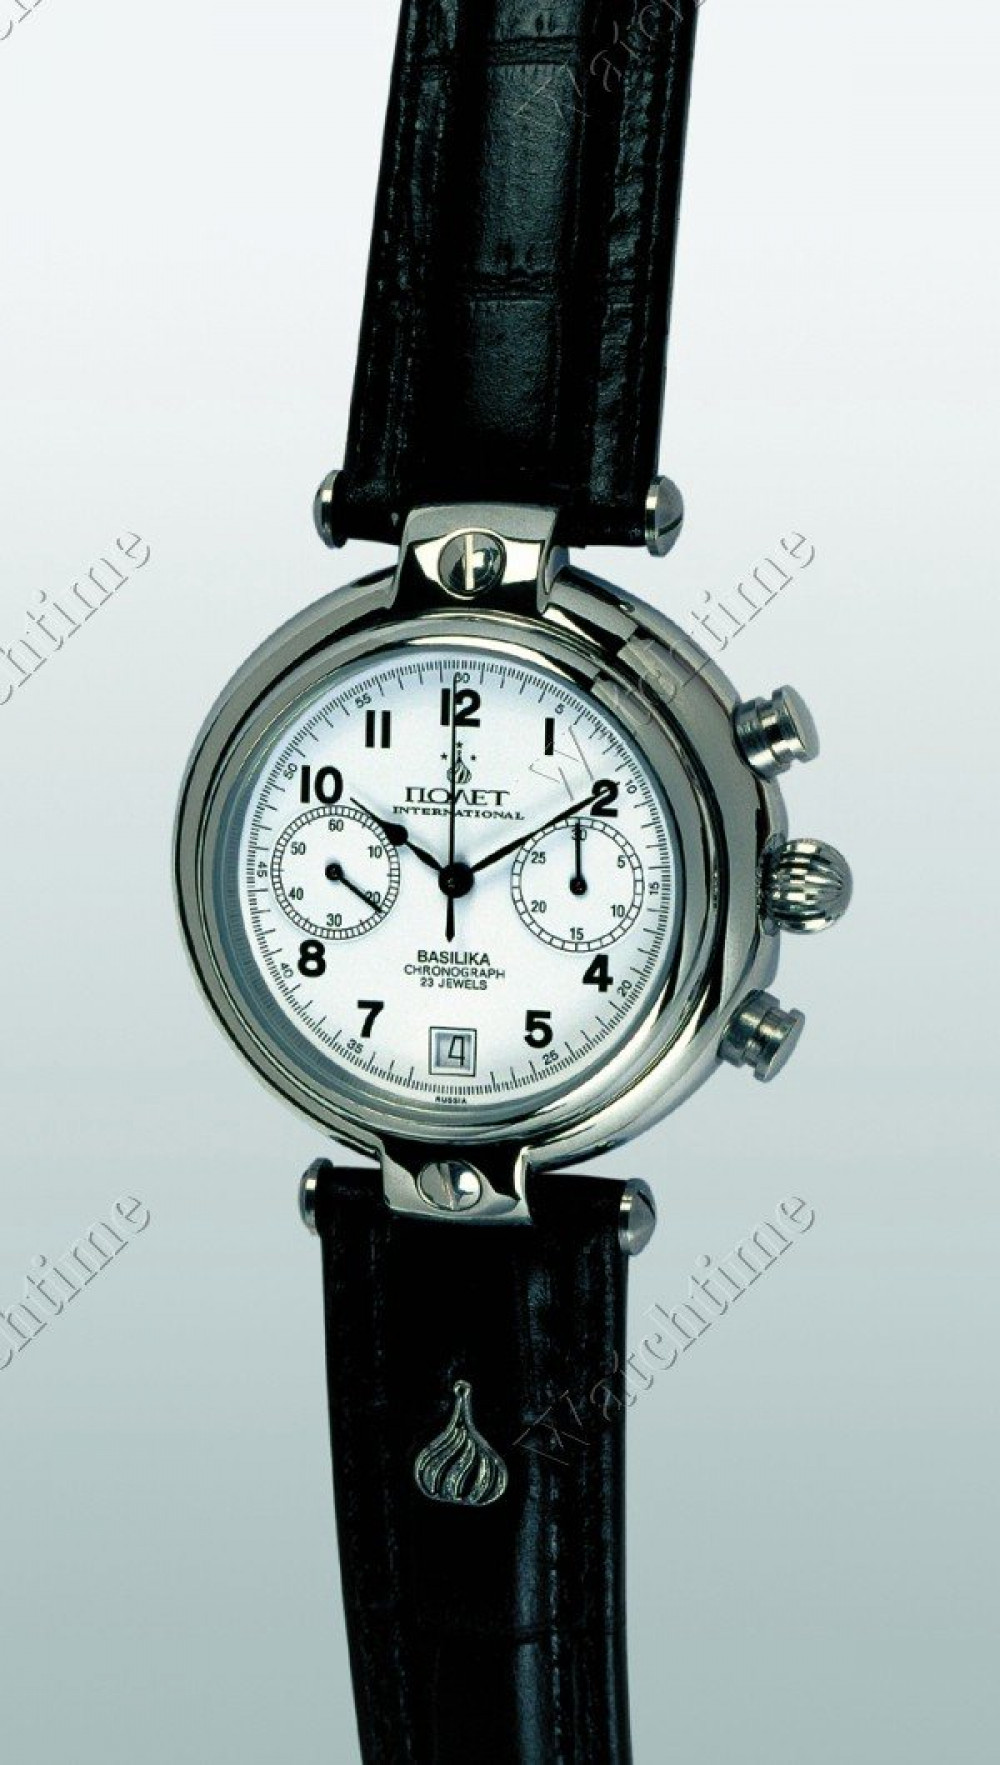 Zegarek firmy Poljot - International, model Basilika-Chrono